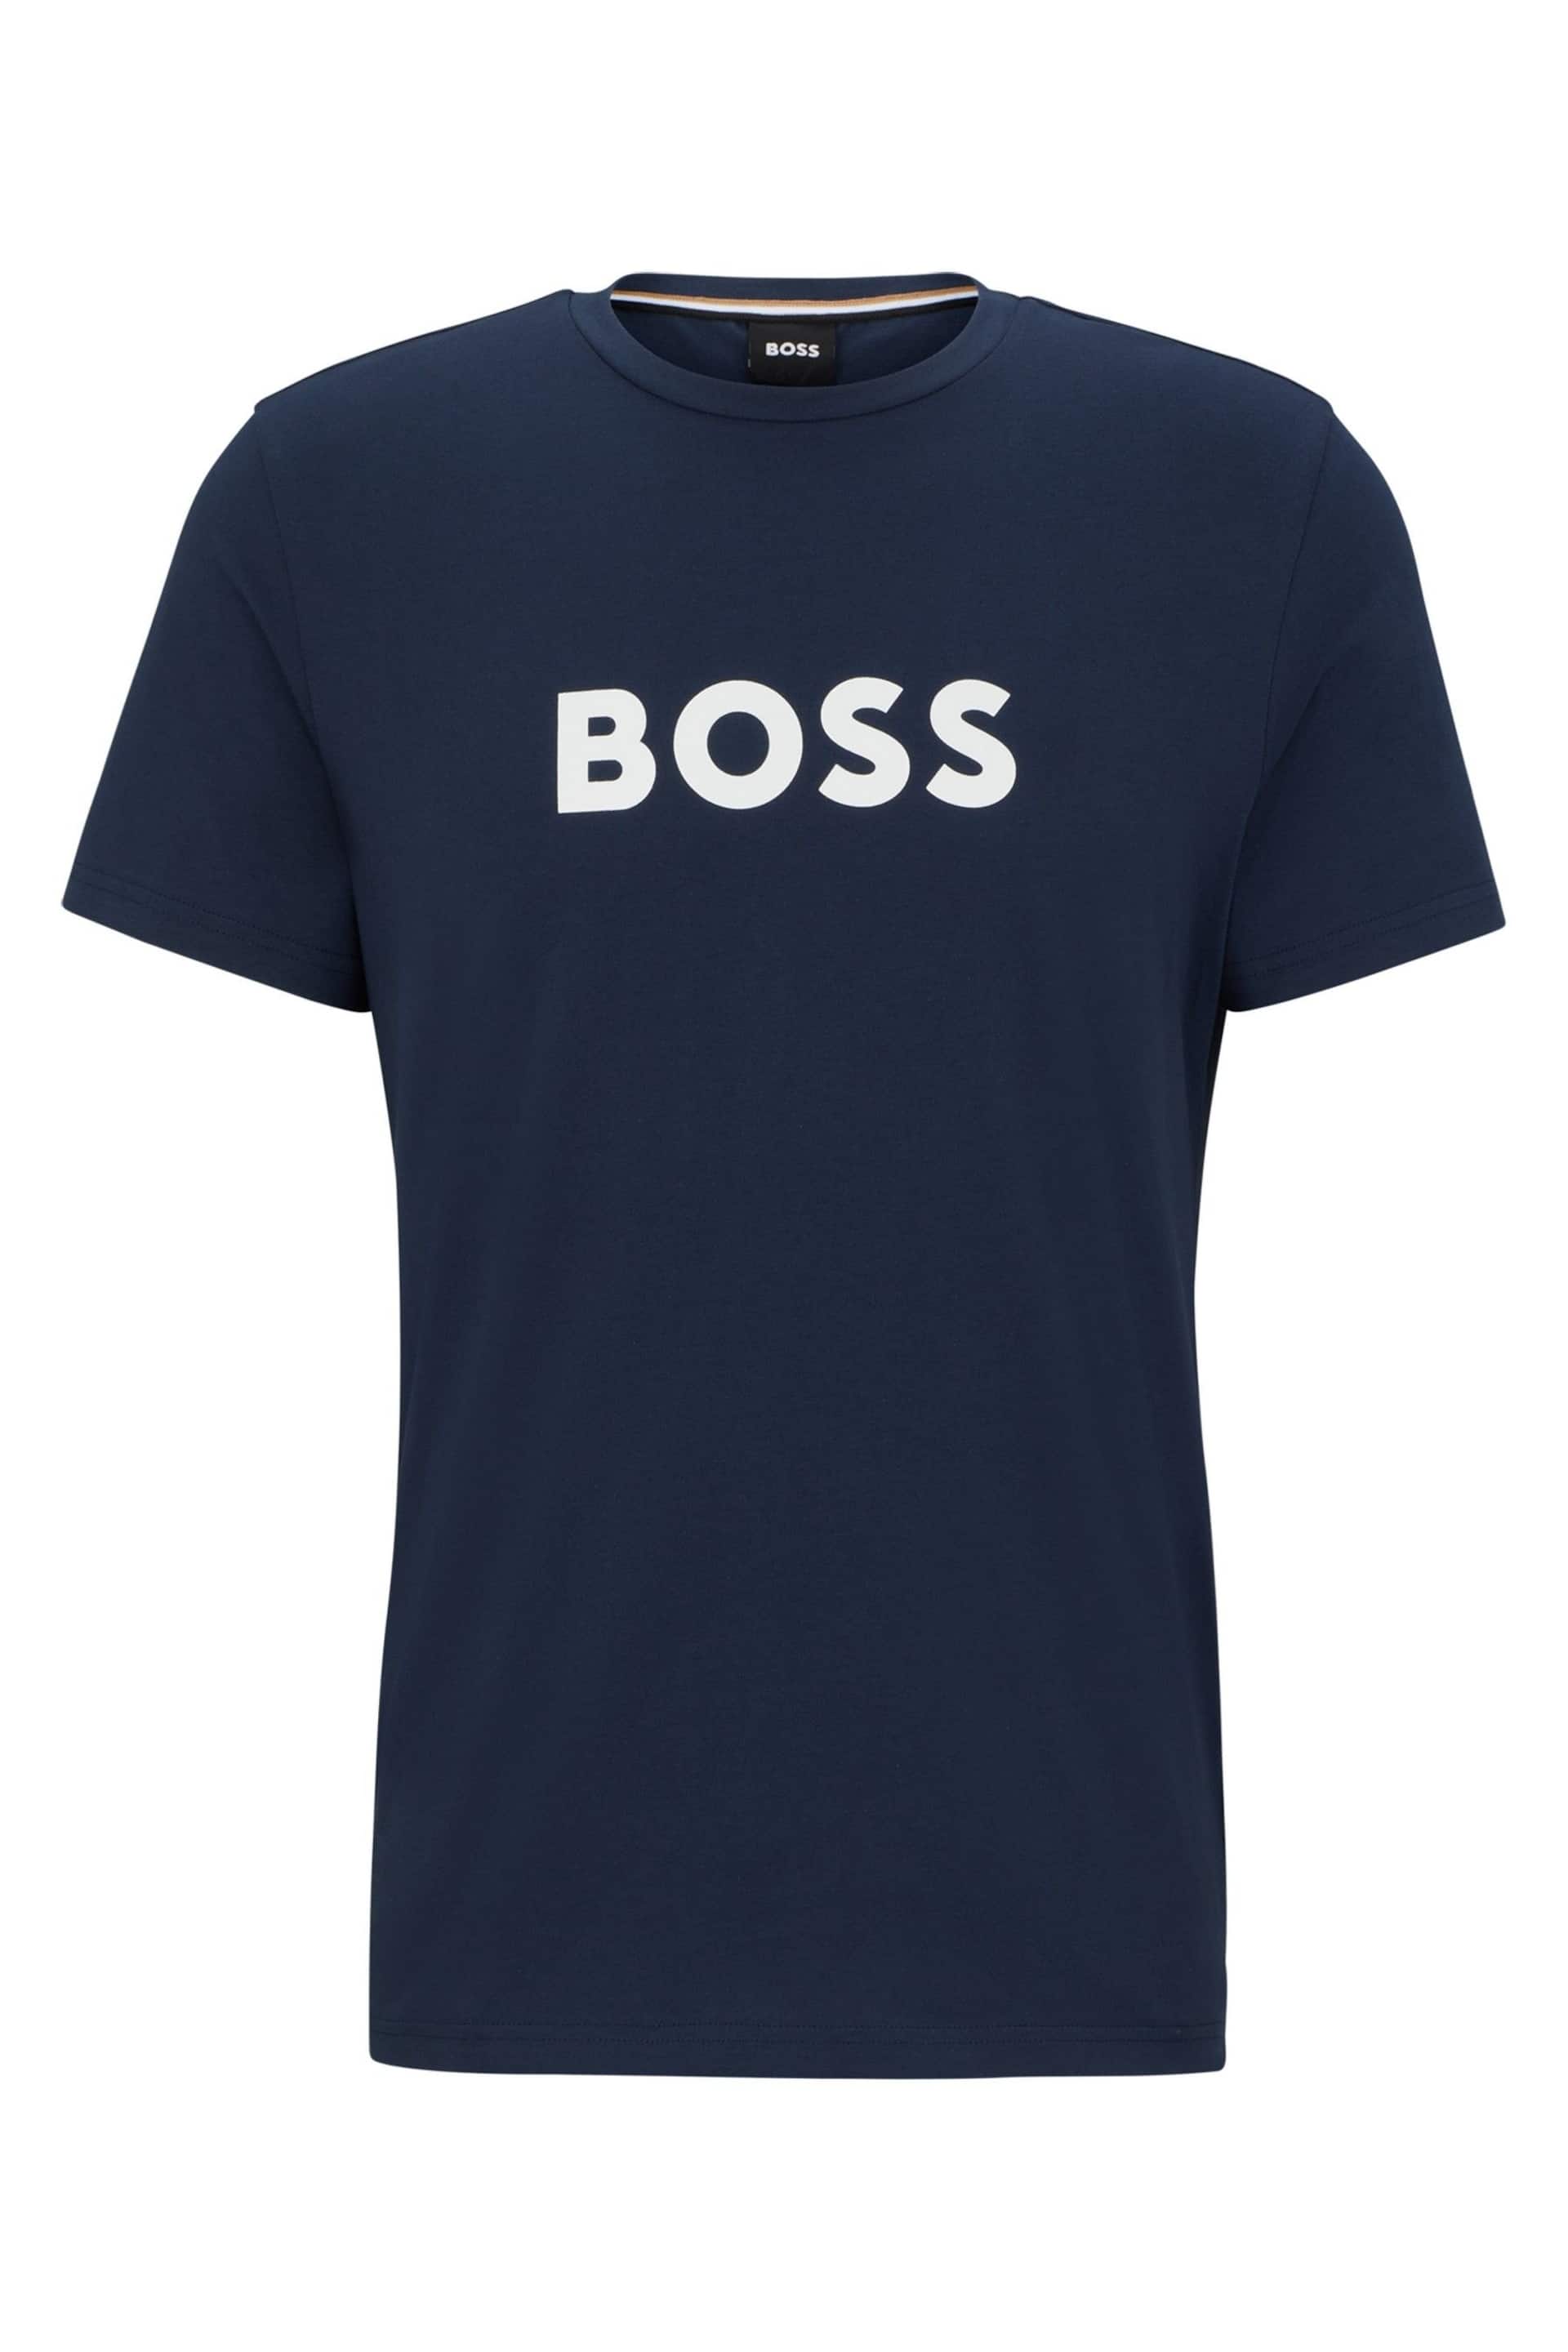 BOSS Dark Blue Large Chest Logo T-Shirt - Image 5 of 5